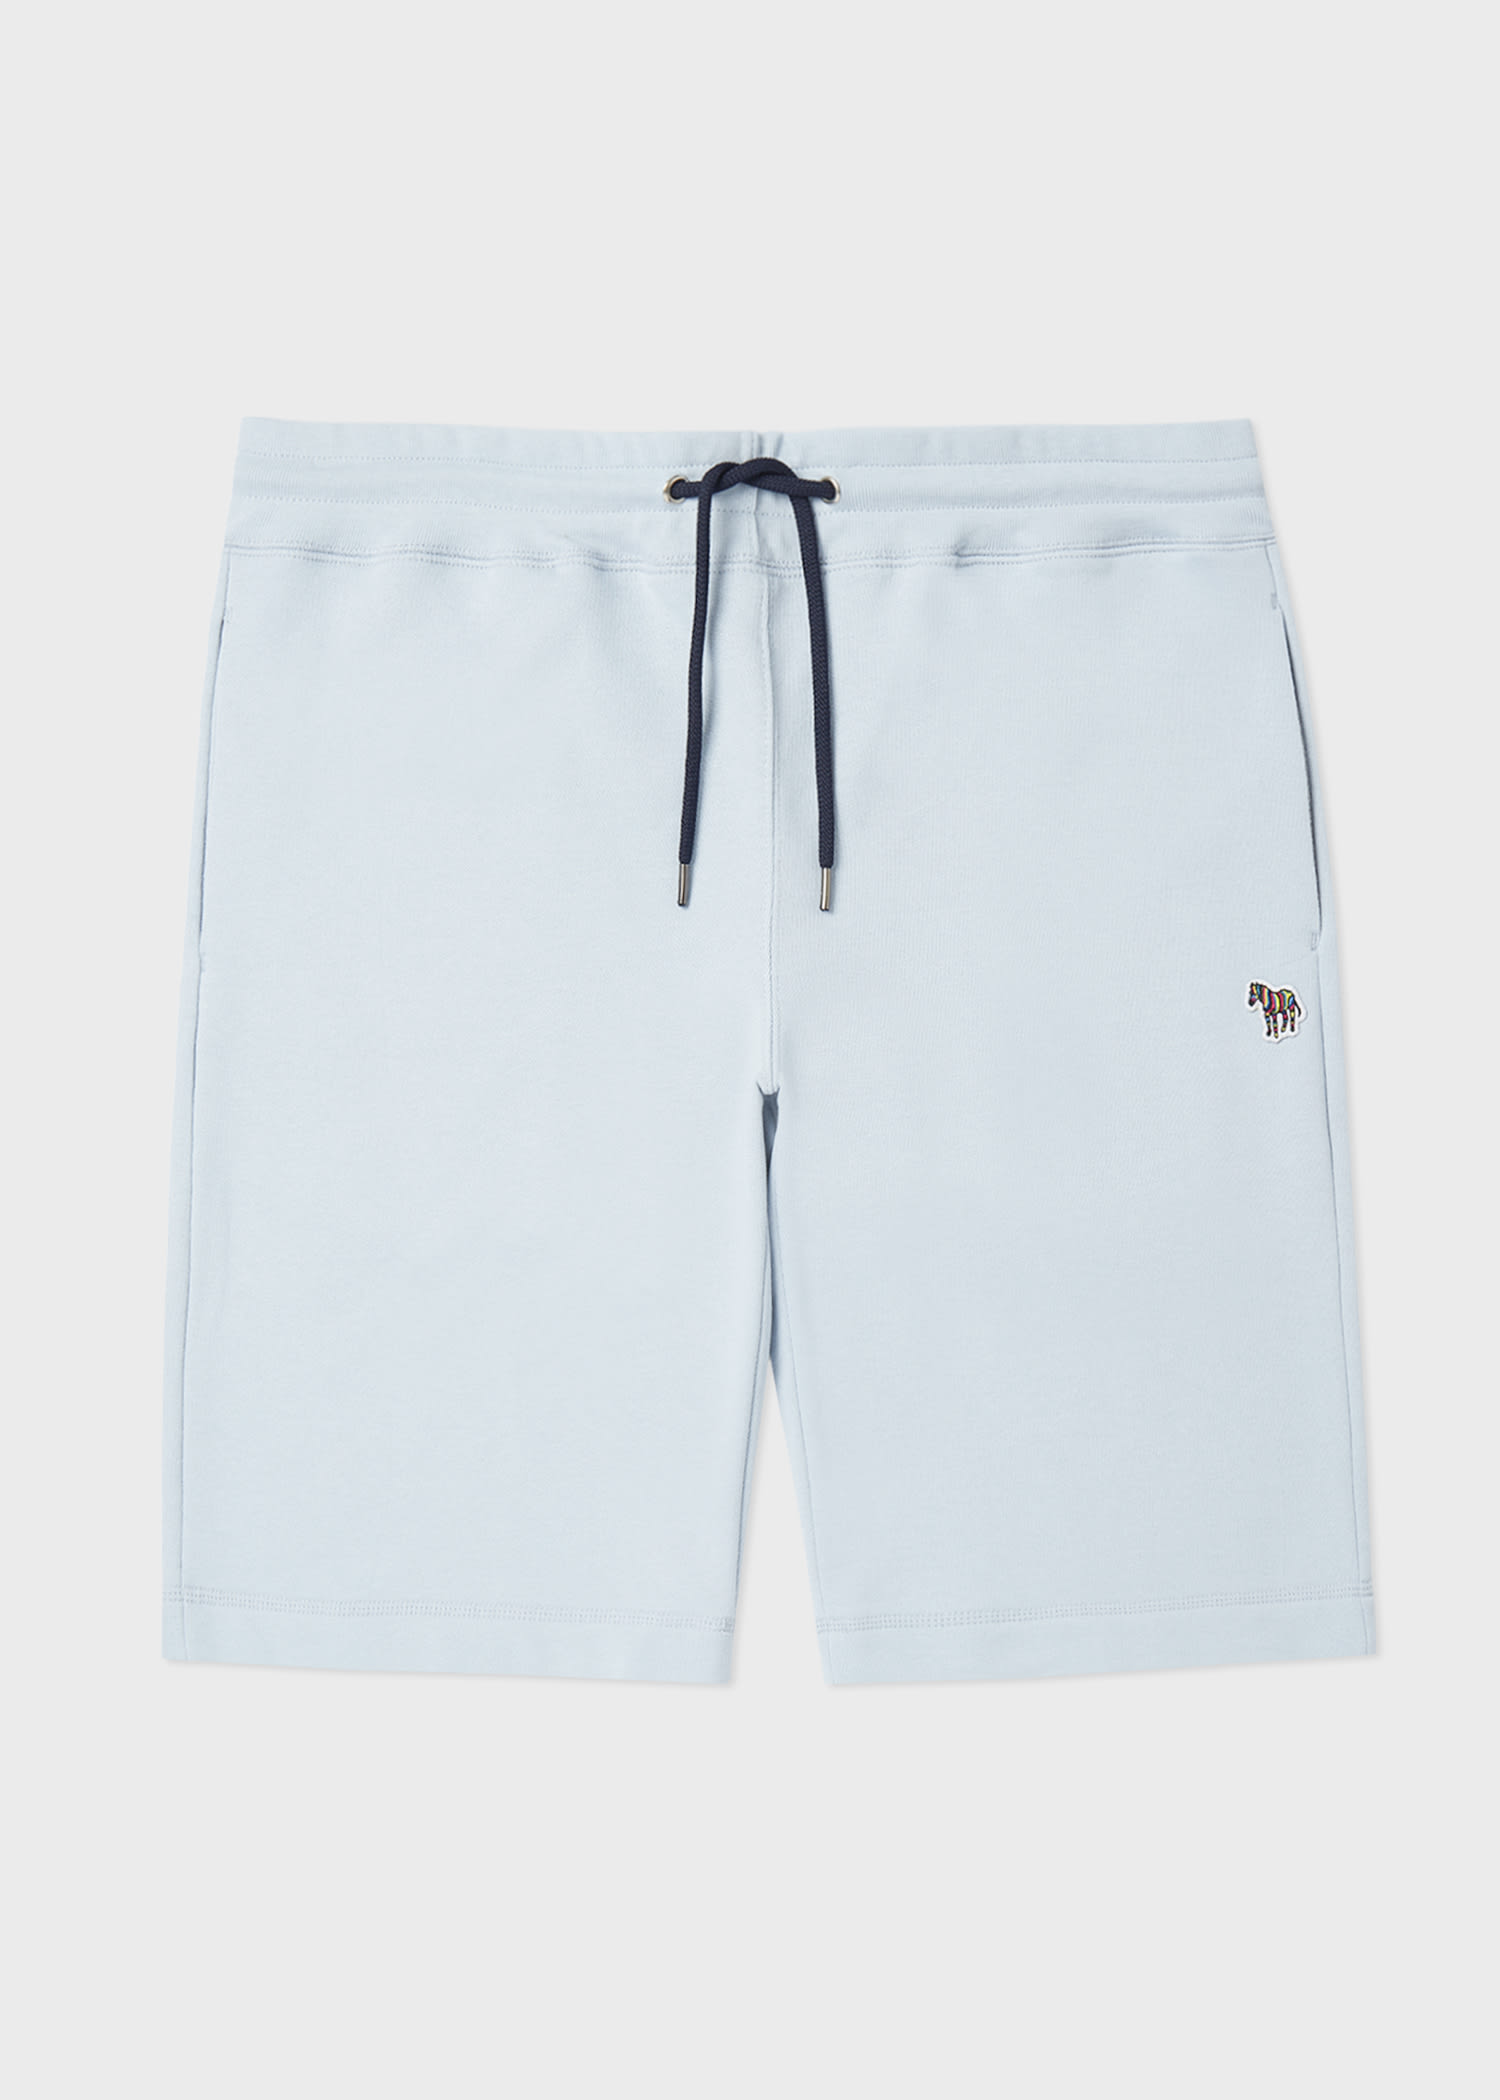 Men's Designer Cotton & Chino Shorts - Paul Smith US